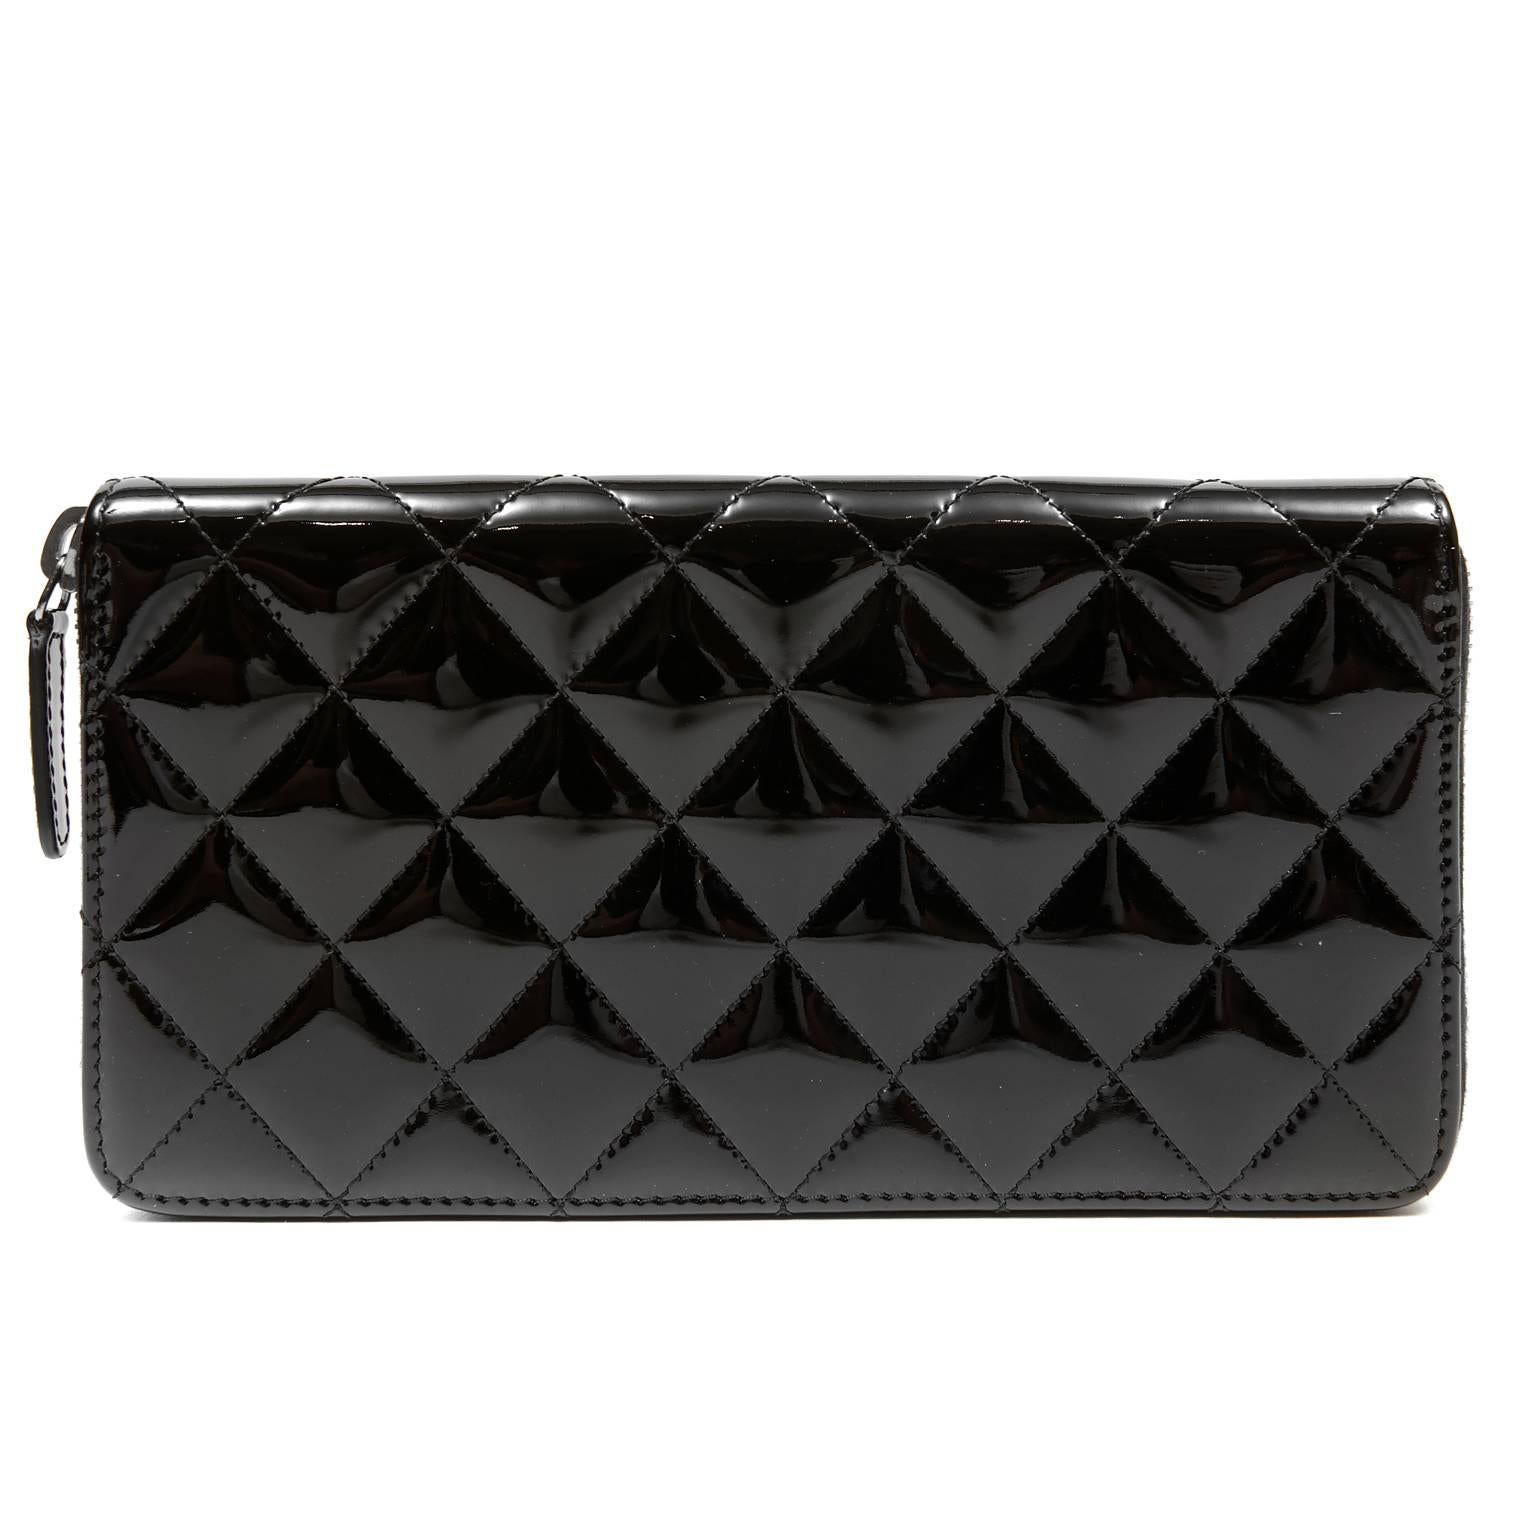 Women's Chanel Black Patent Leather Large Zip Wallet